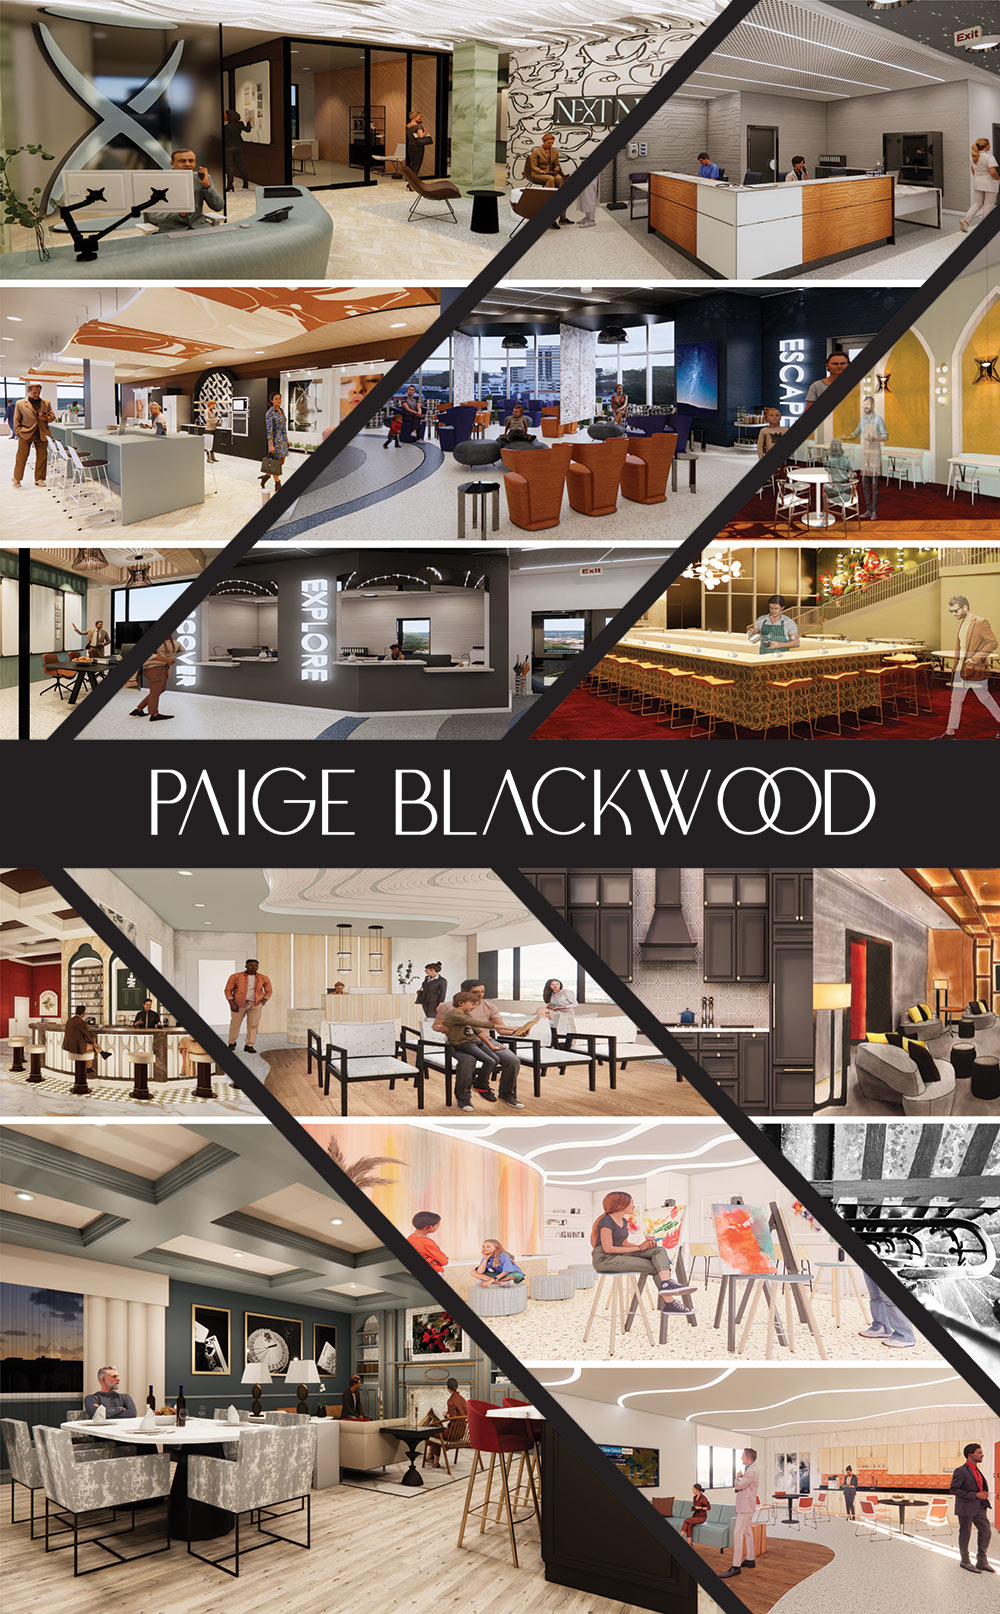 Paige Blackwood's interior design senior exhibit board